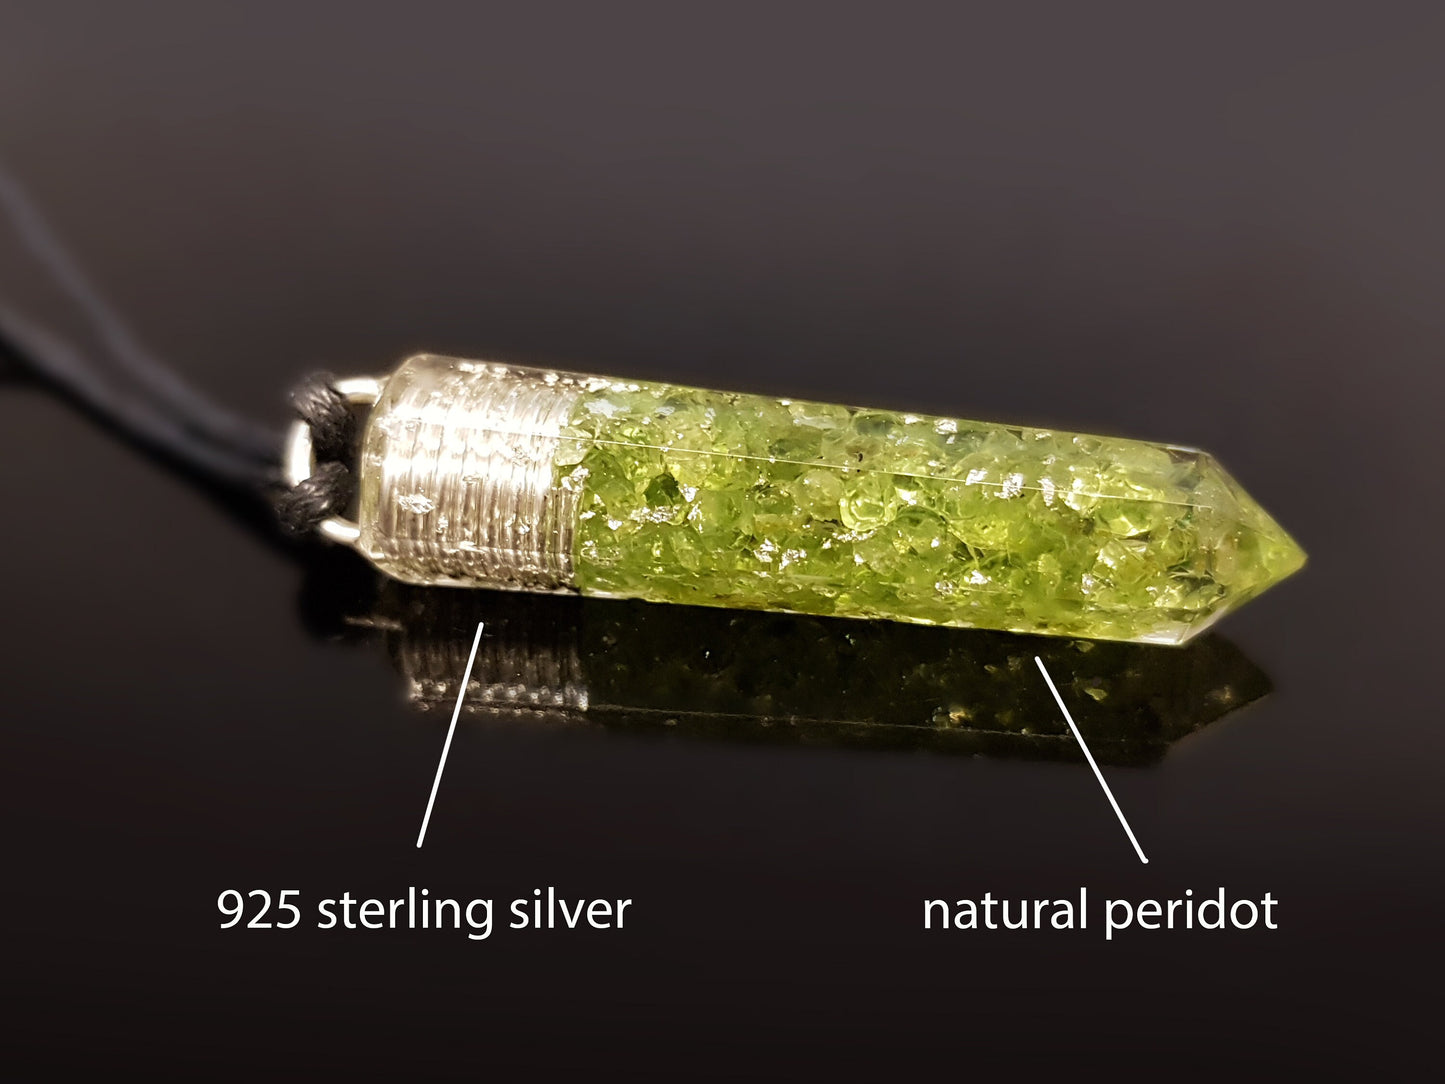 Peridot Orgonite Orgone pendant necklace. Reiki crystal healing chakra pendant. Money attraction amulet.